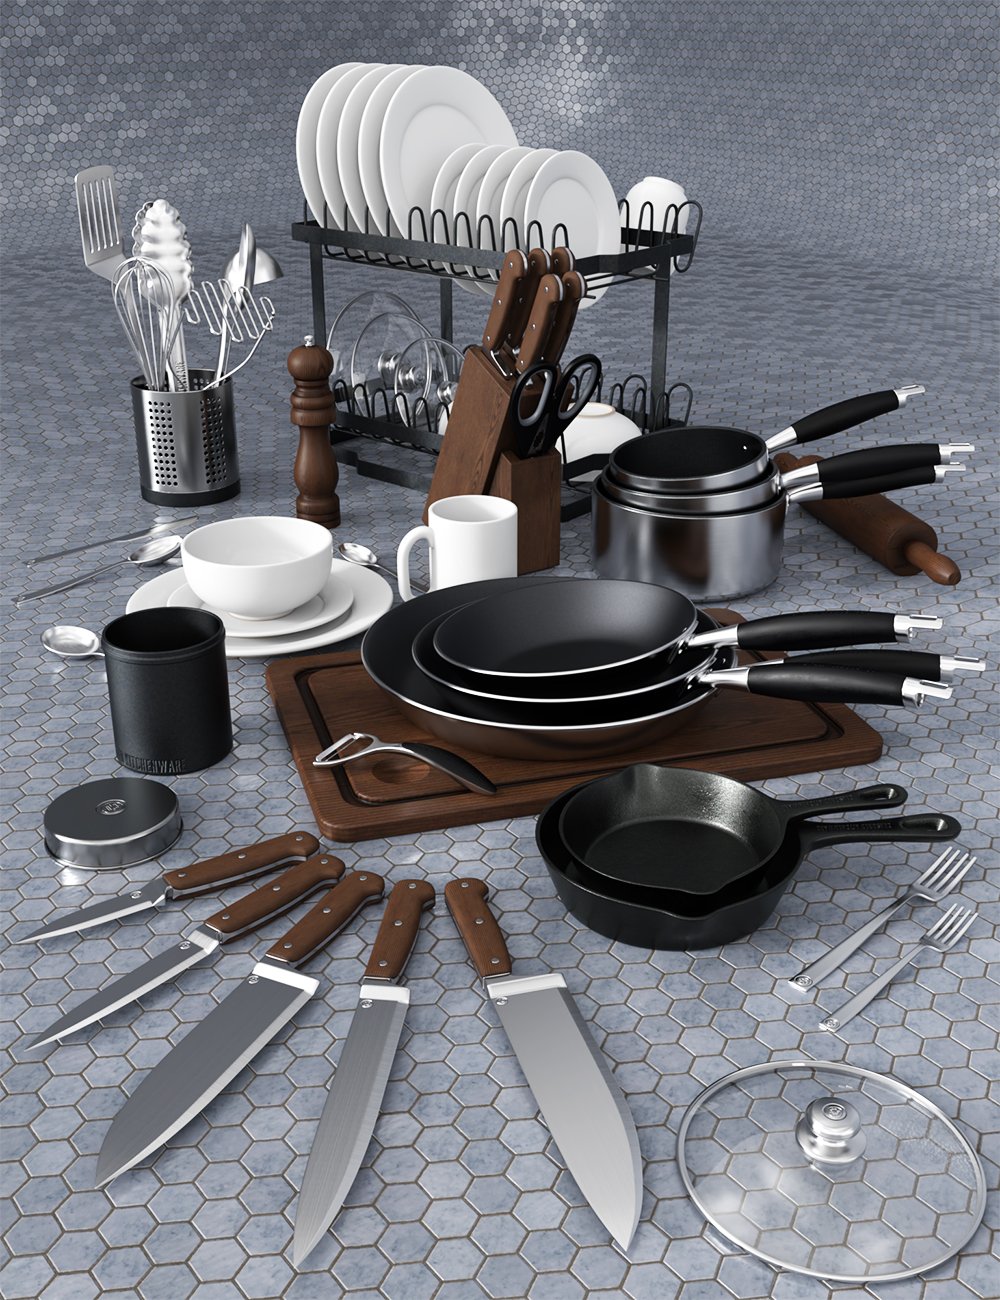 Kitchen spatula set 3D model